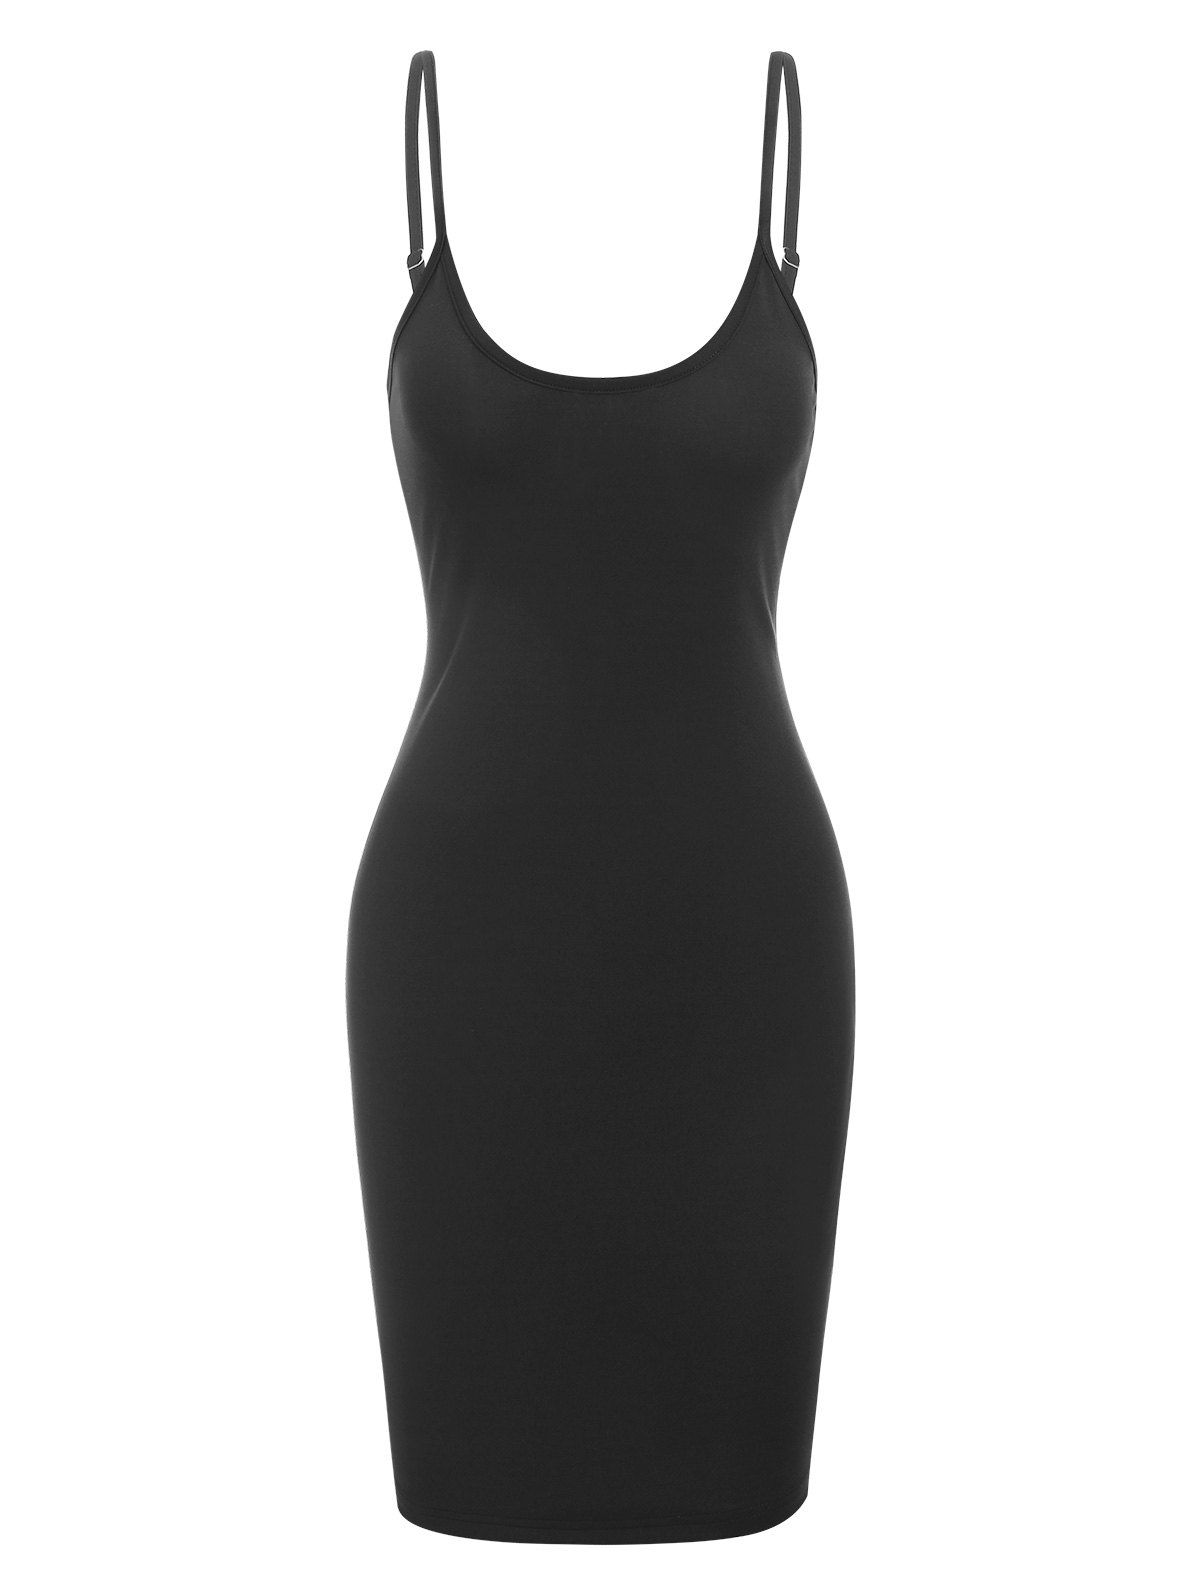 Spaghetti Strap Plain Mini Bodycon Dress - BLACK L